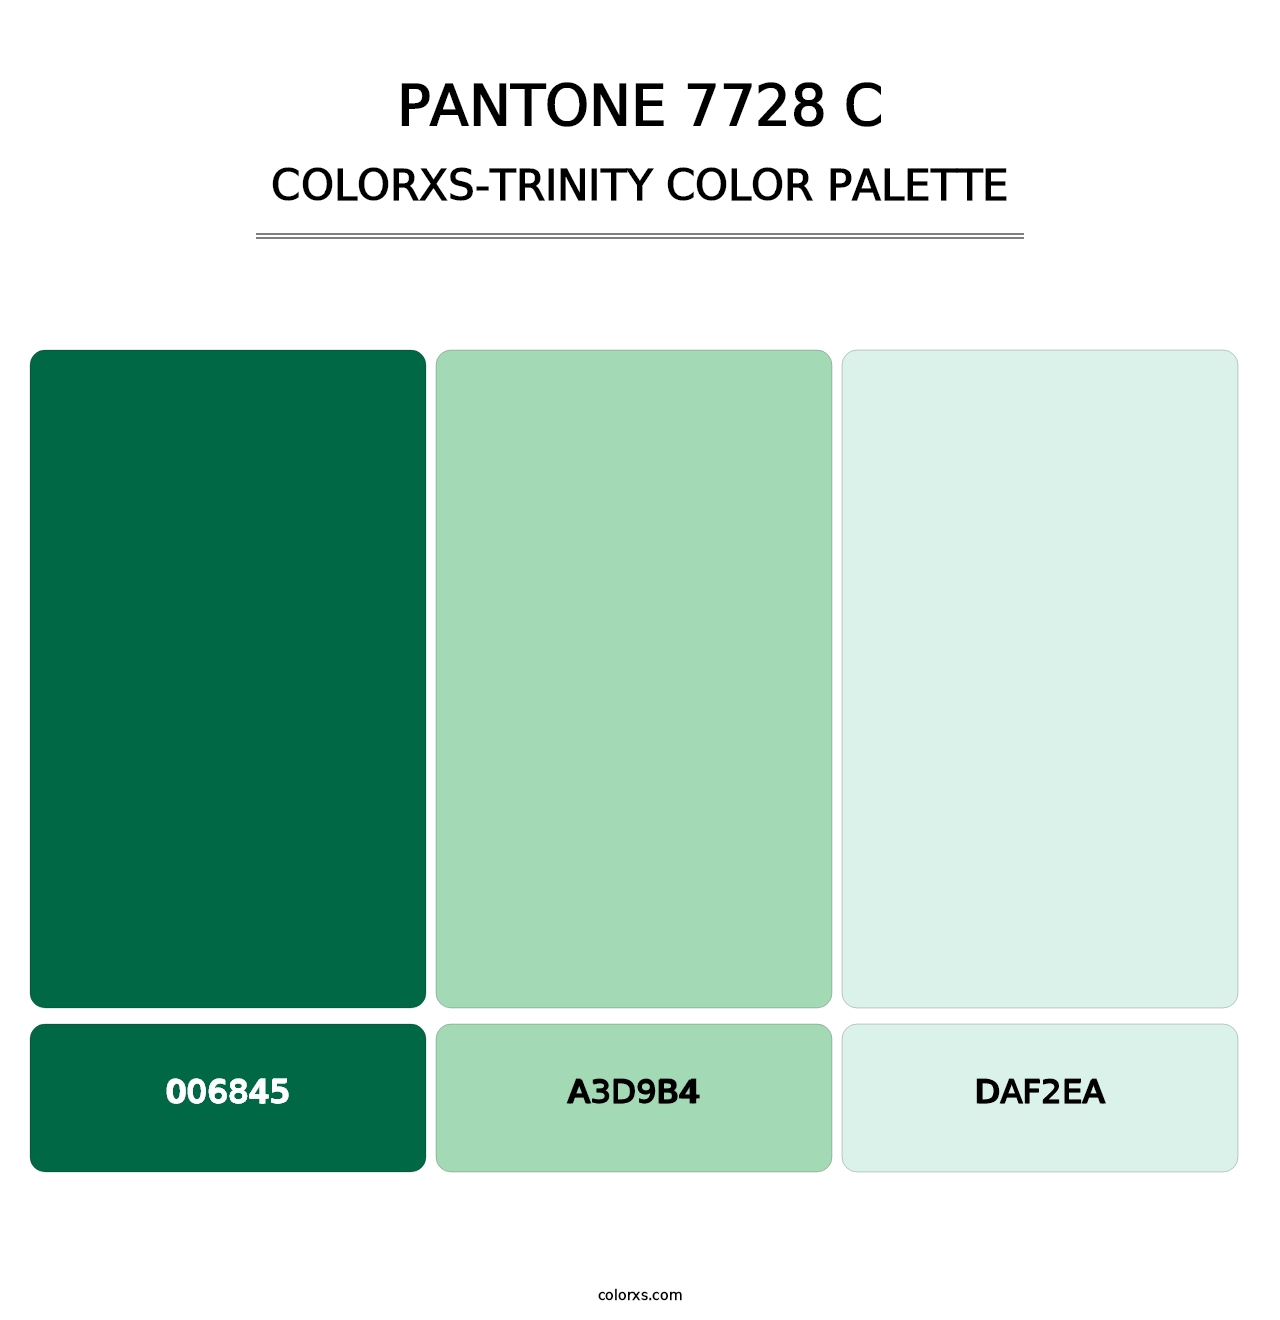 PANTONE 7728 C - Colorxs Trinity Palette